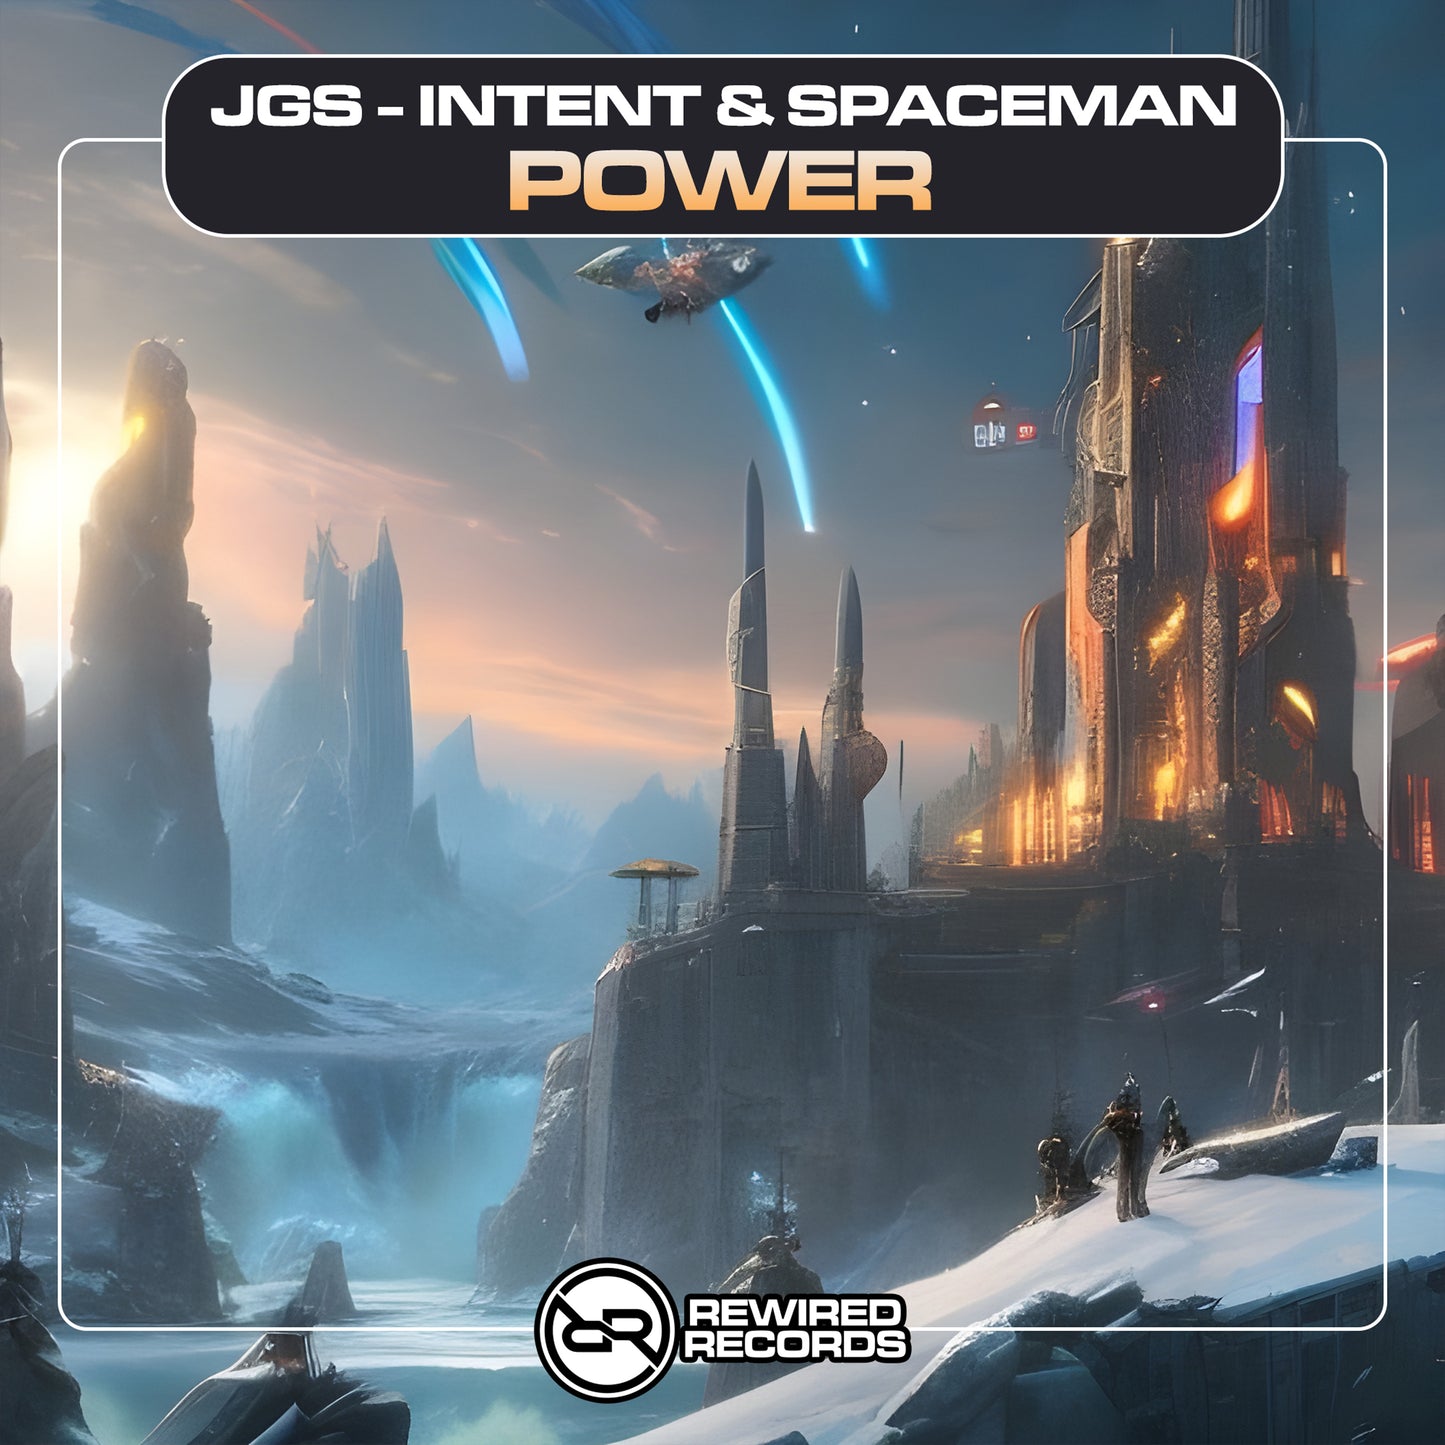 JGS, INTENT & SPACEMAN - Power